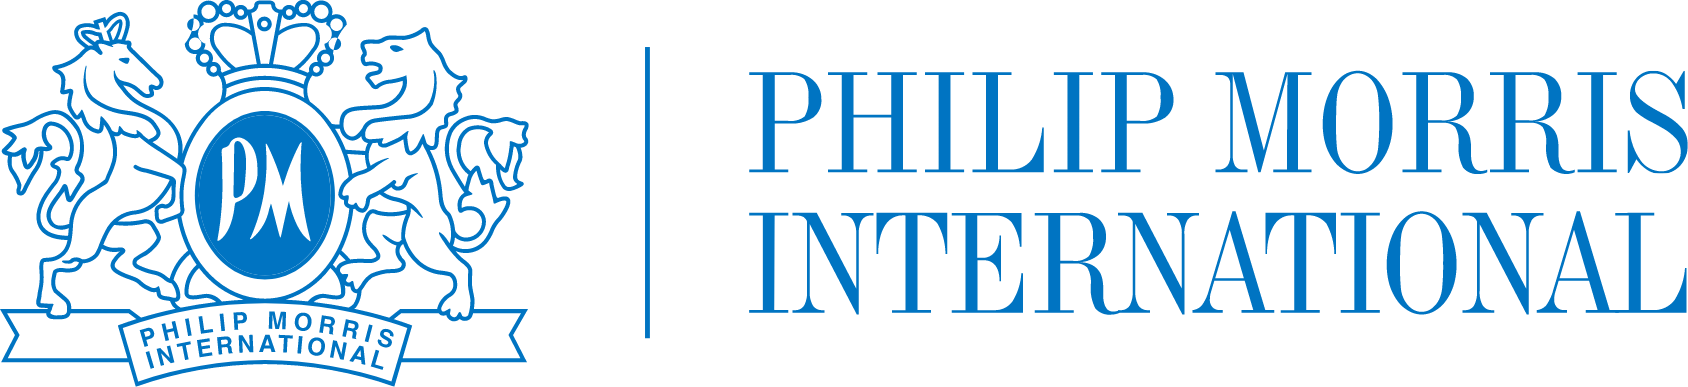 Philip Morris logo large (transparent PNG)